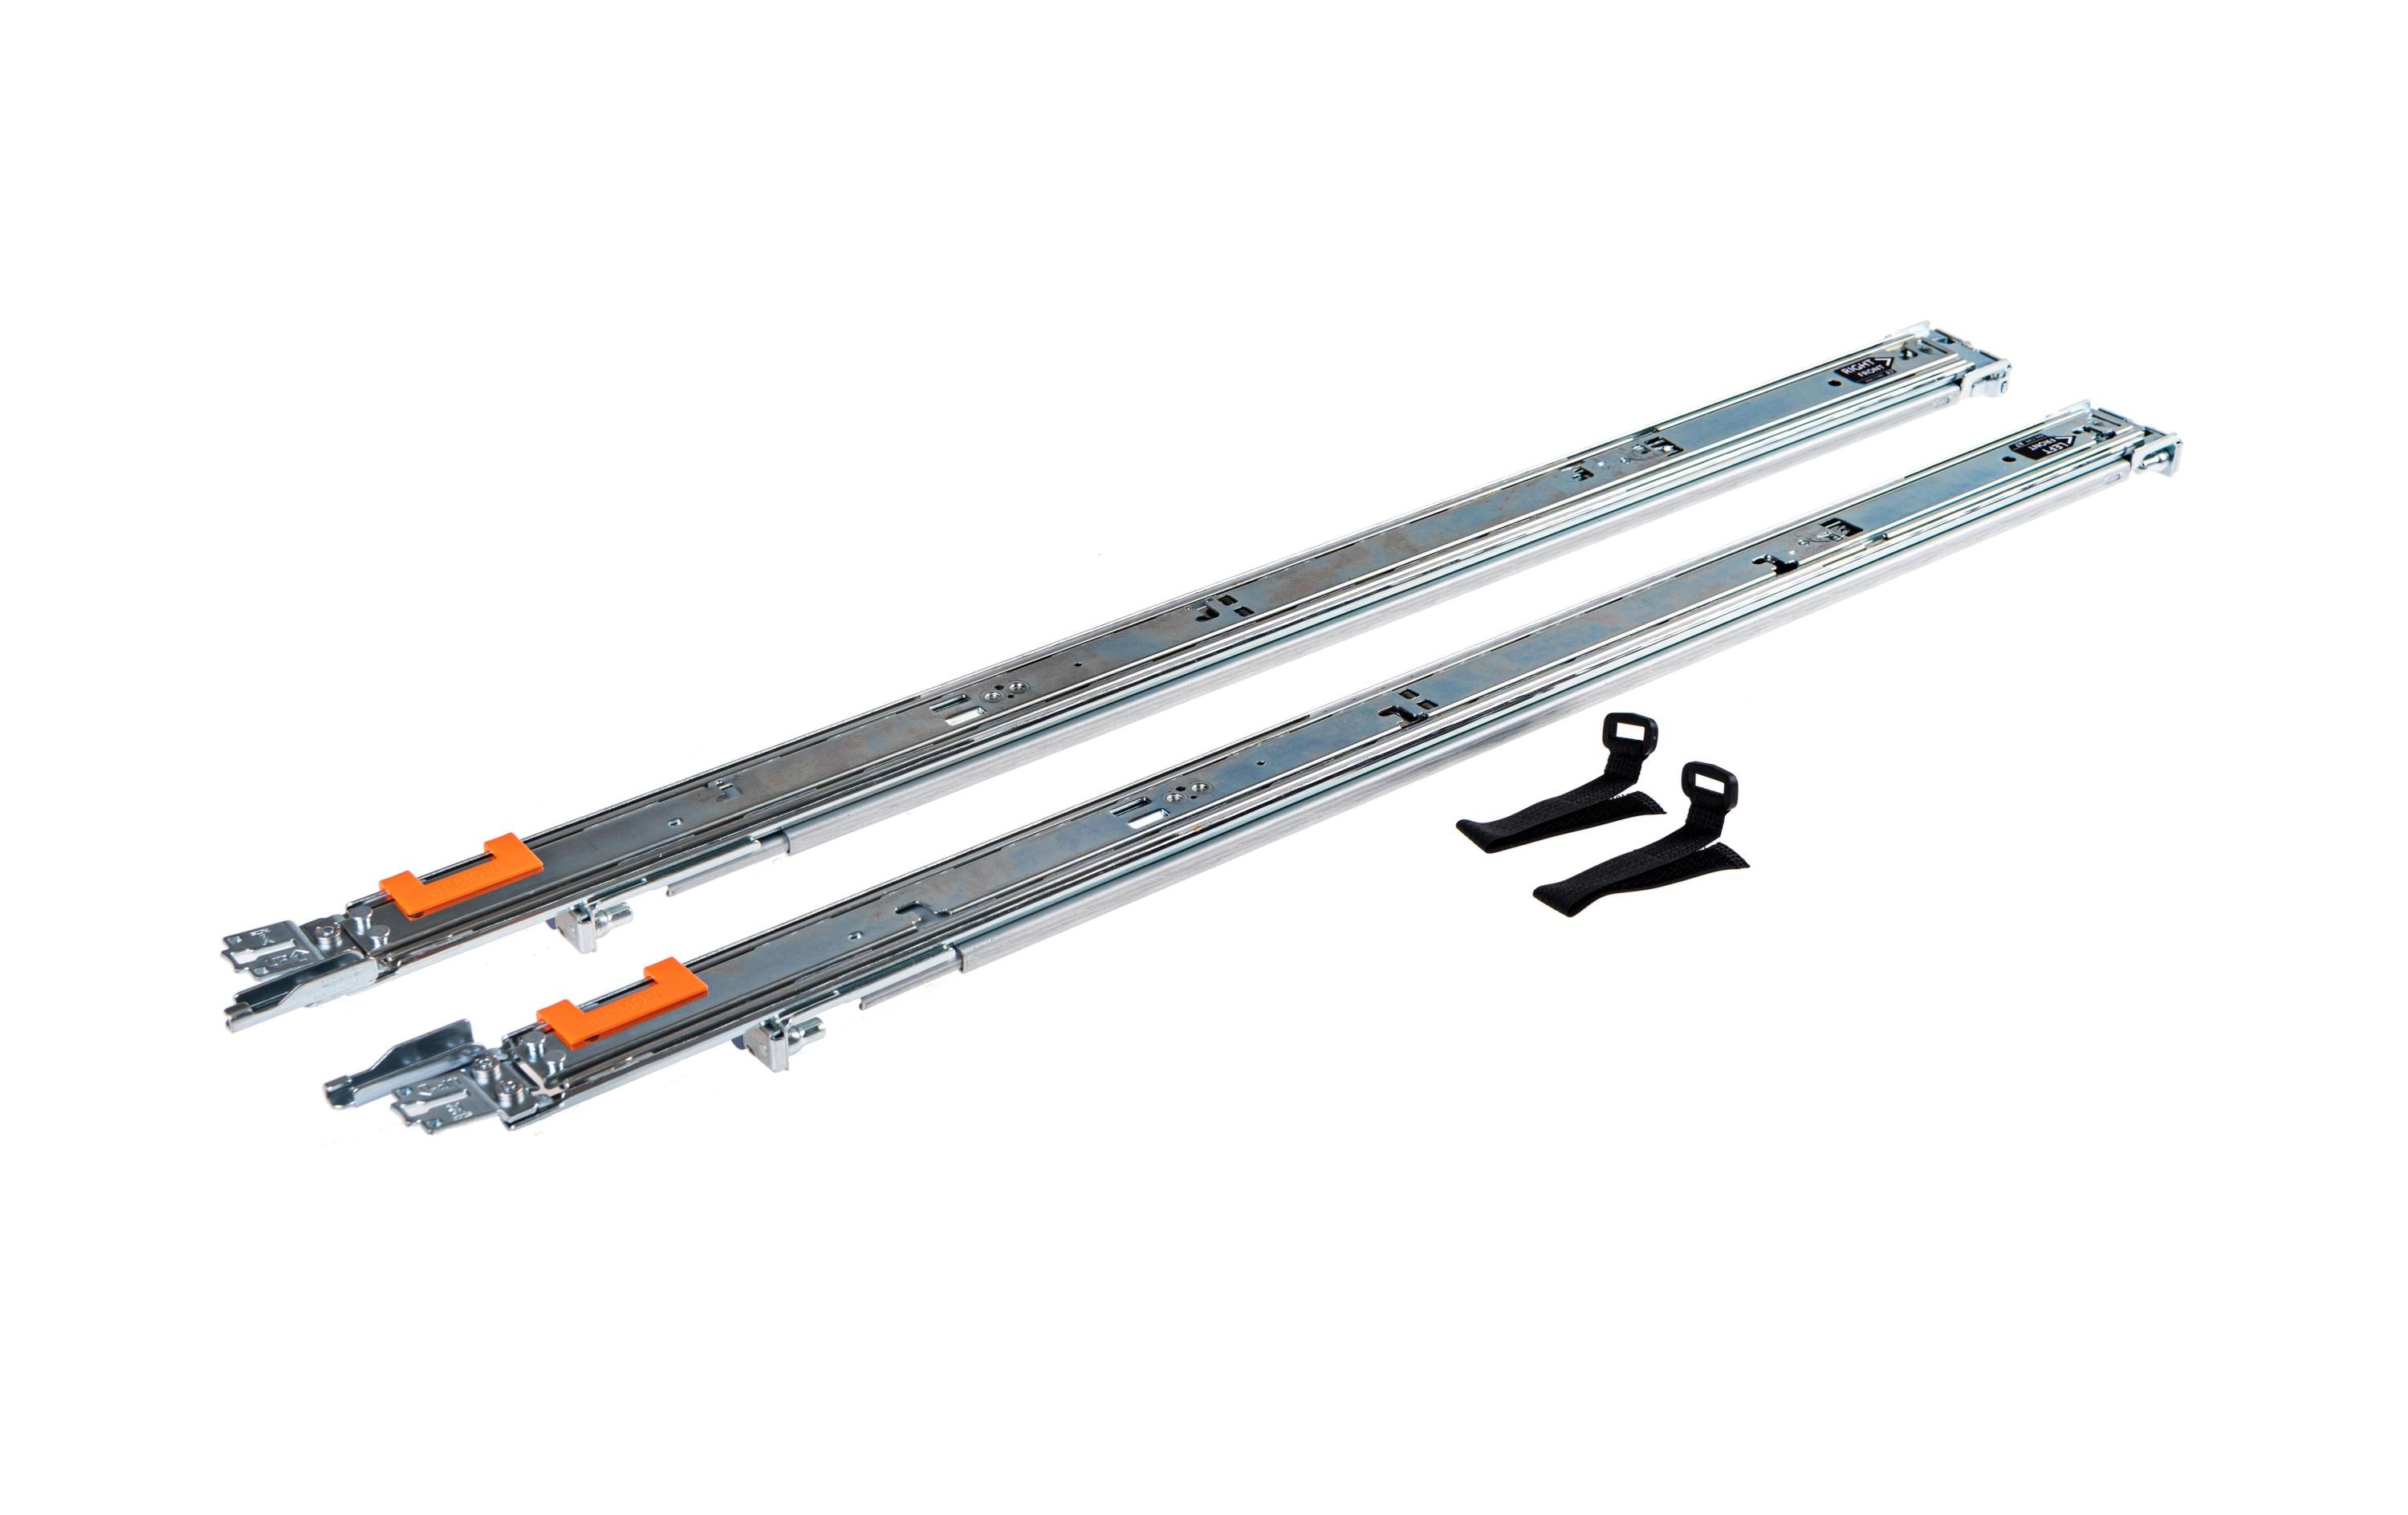 DELL Rackmount Kit Ready Rails 1U Sliding Rails CusKit 770-BBJR